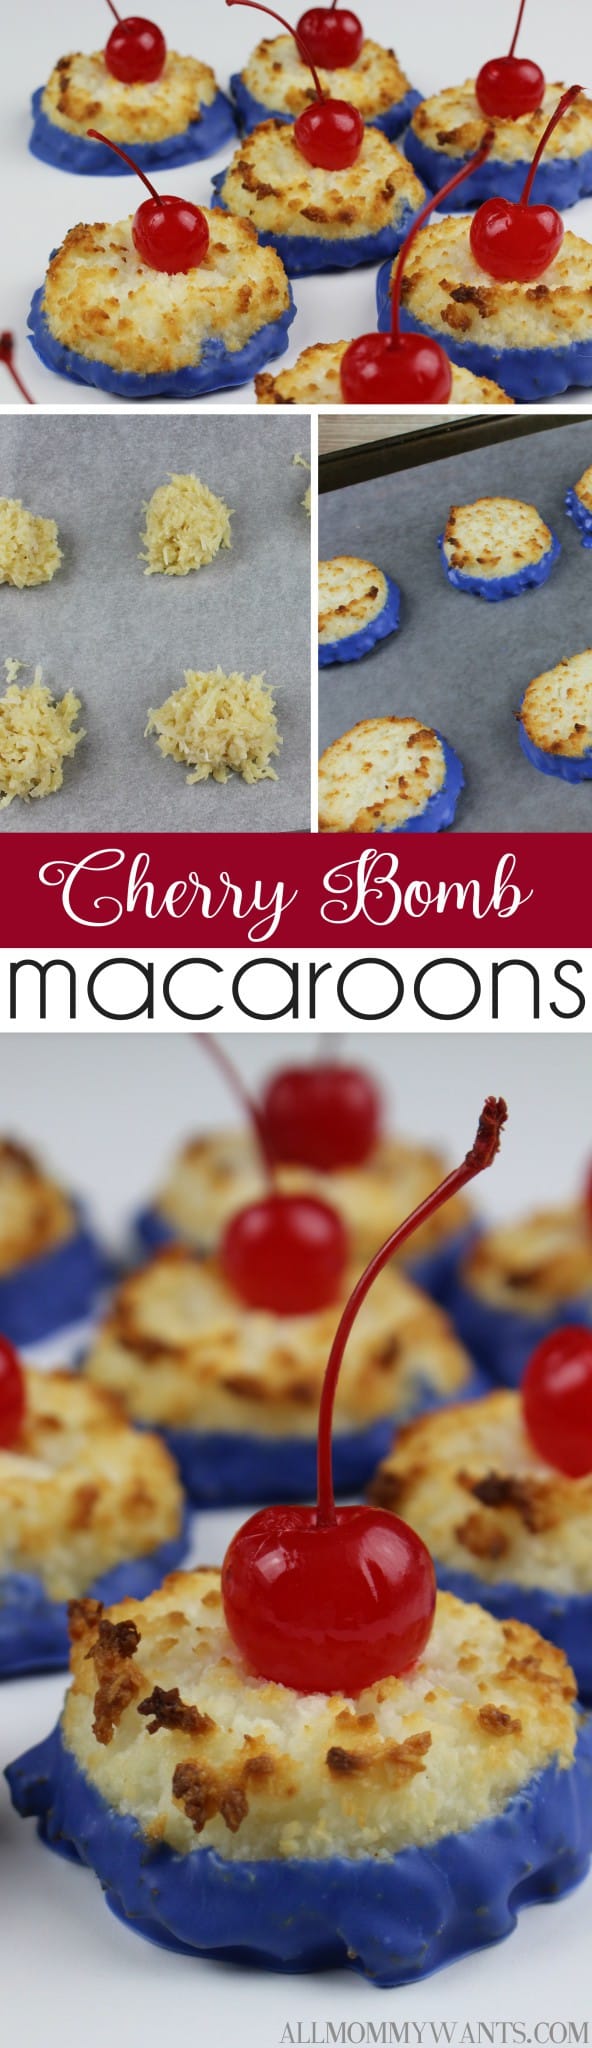 These Coconut Cherry Bomb Macaroons Are Da Bomb!